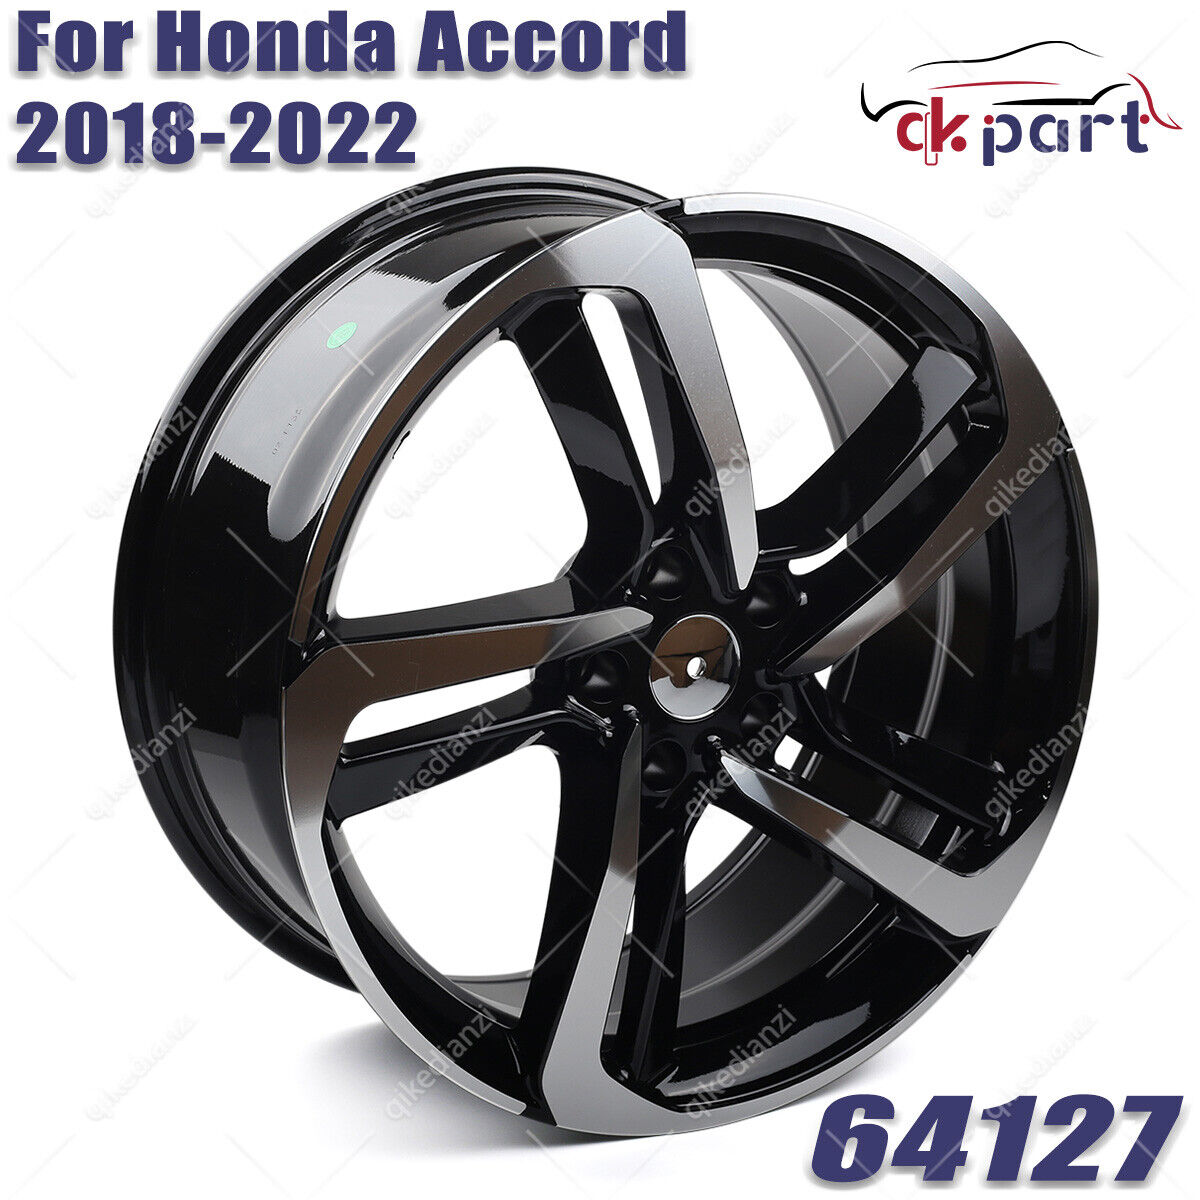 NEW 19 inch For 2018 - 2022 Honda Accord Wheel Rim Aluminum Alloy Black 64127